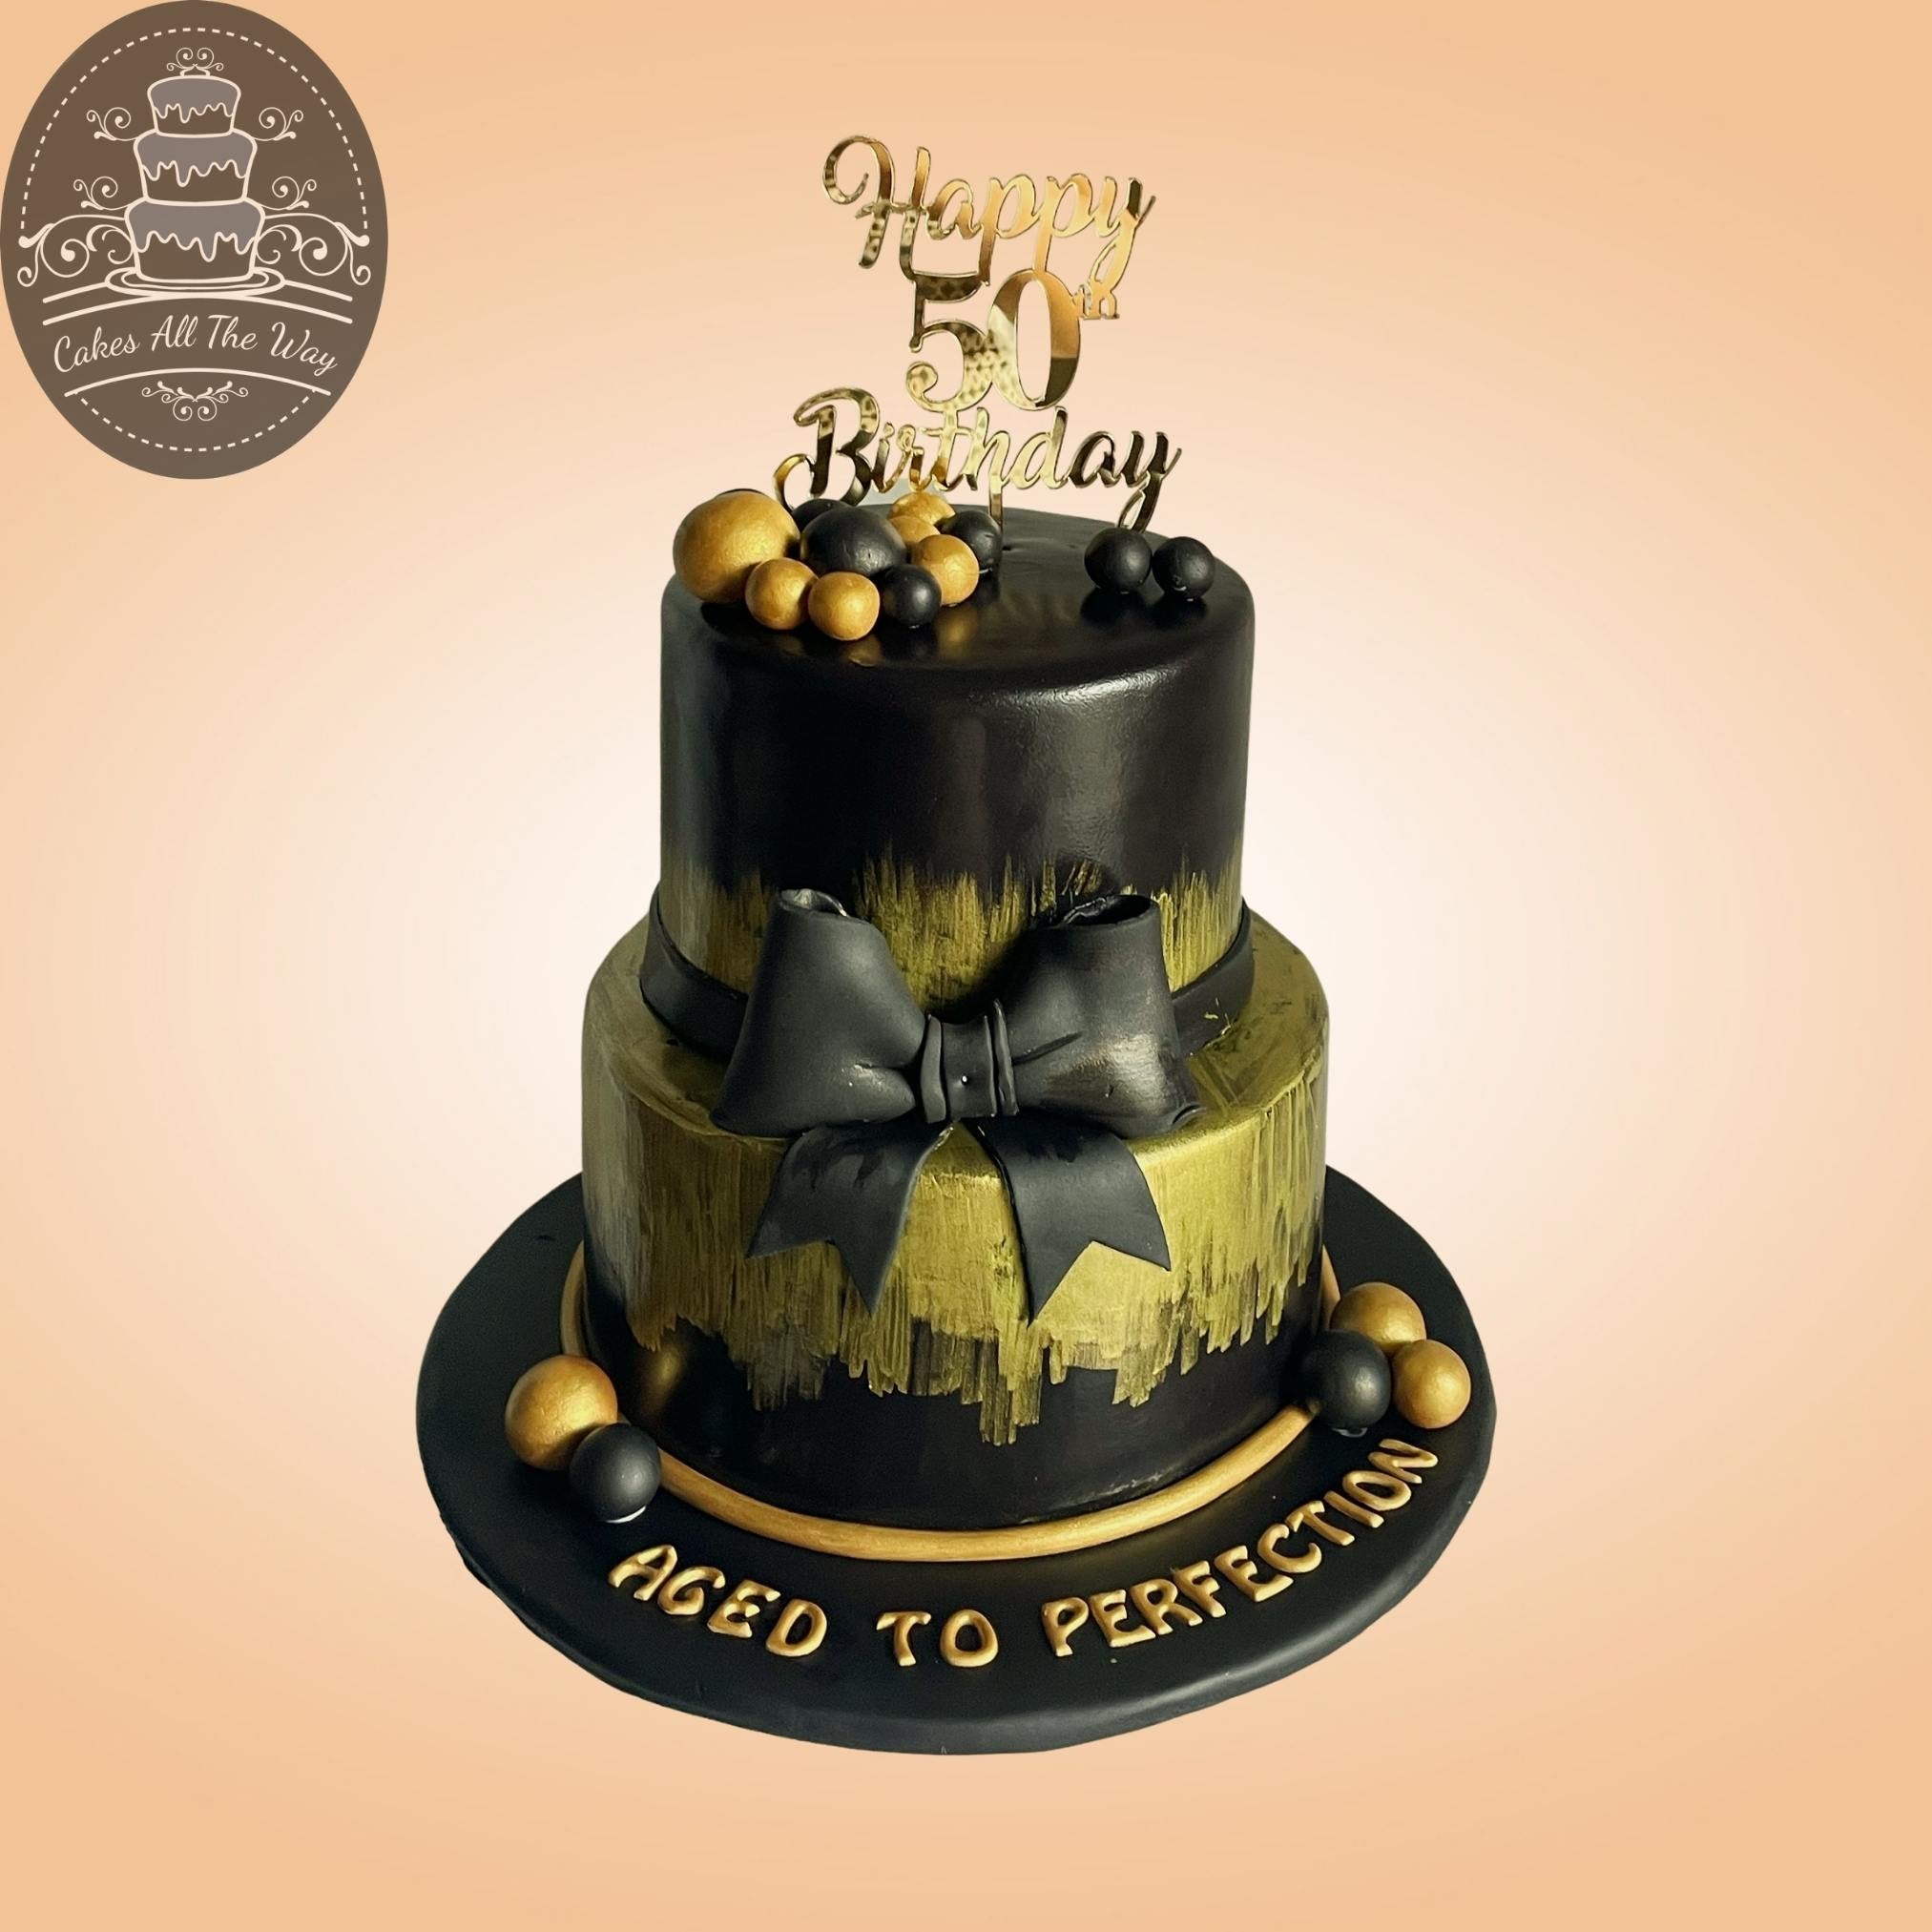 50th Birthday Cake Images - Free Download on Freepik